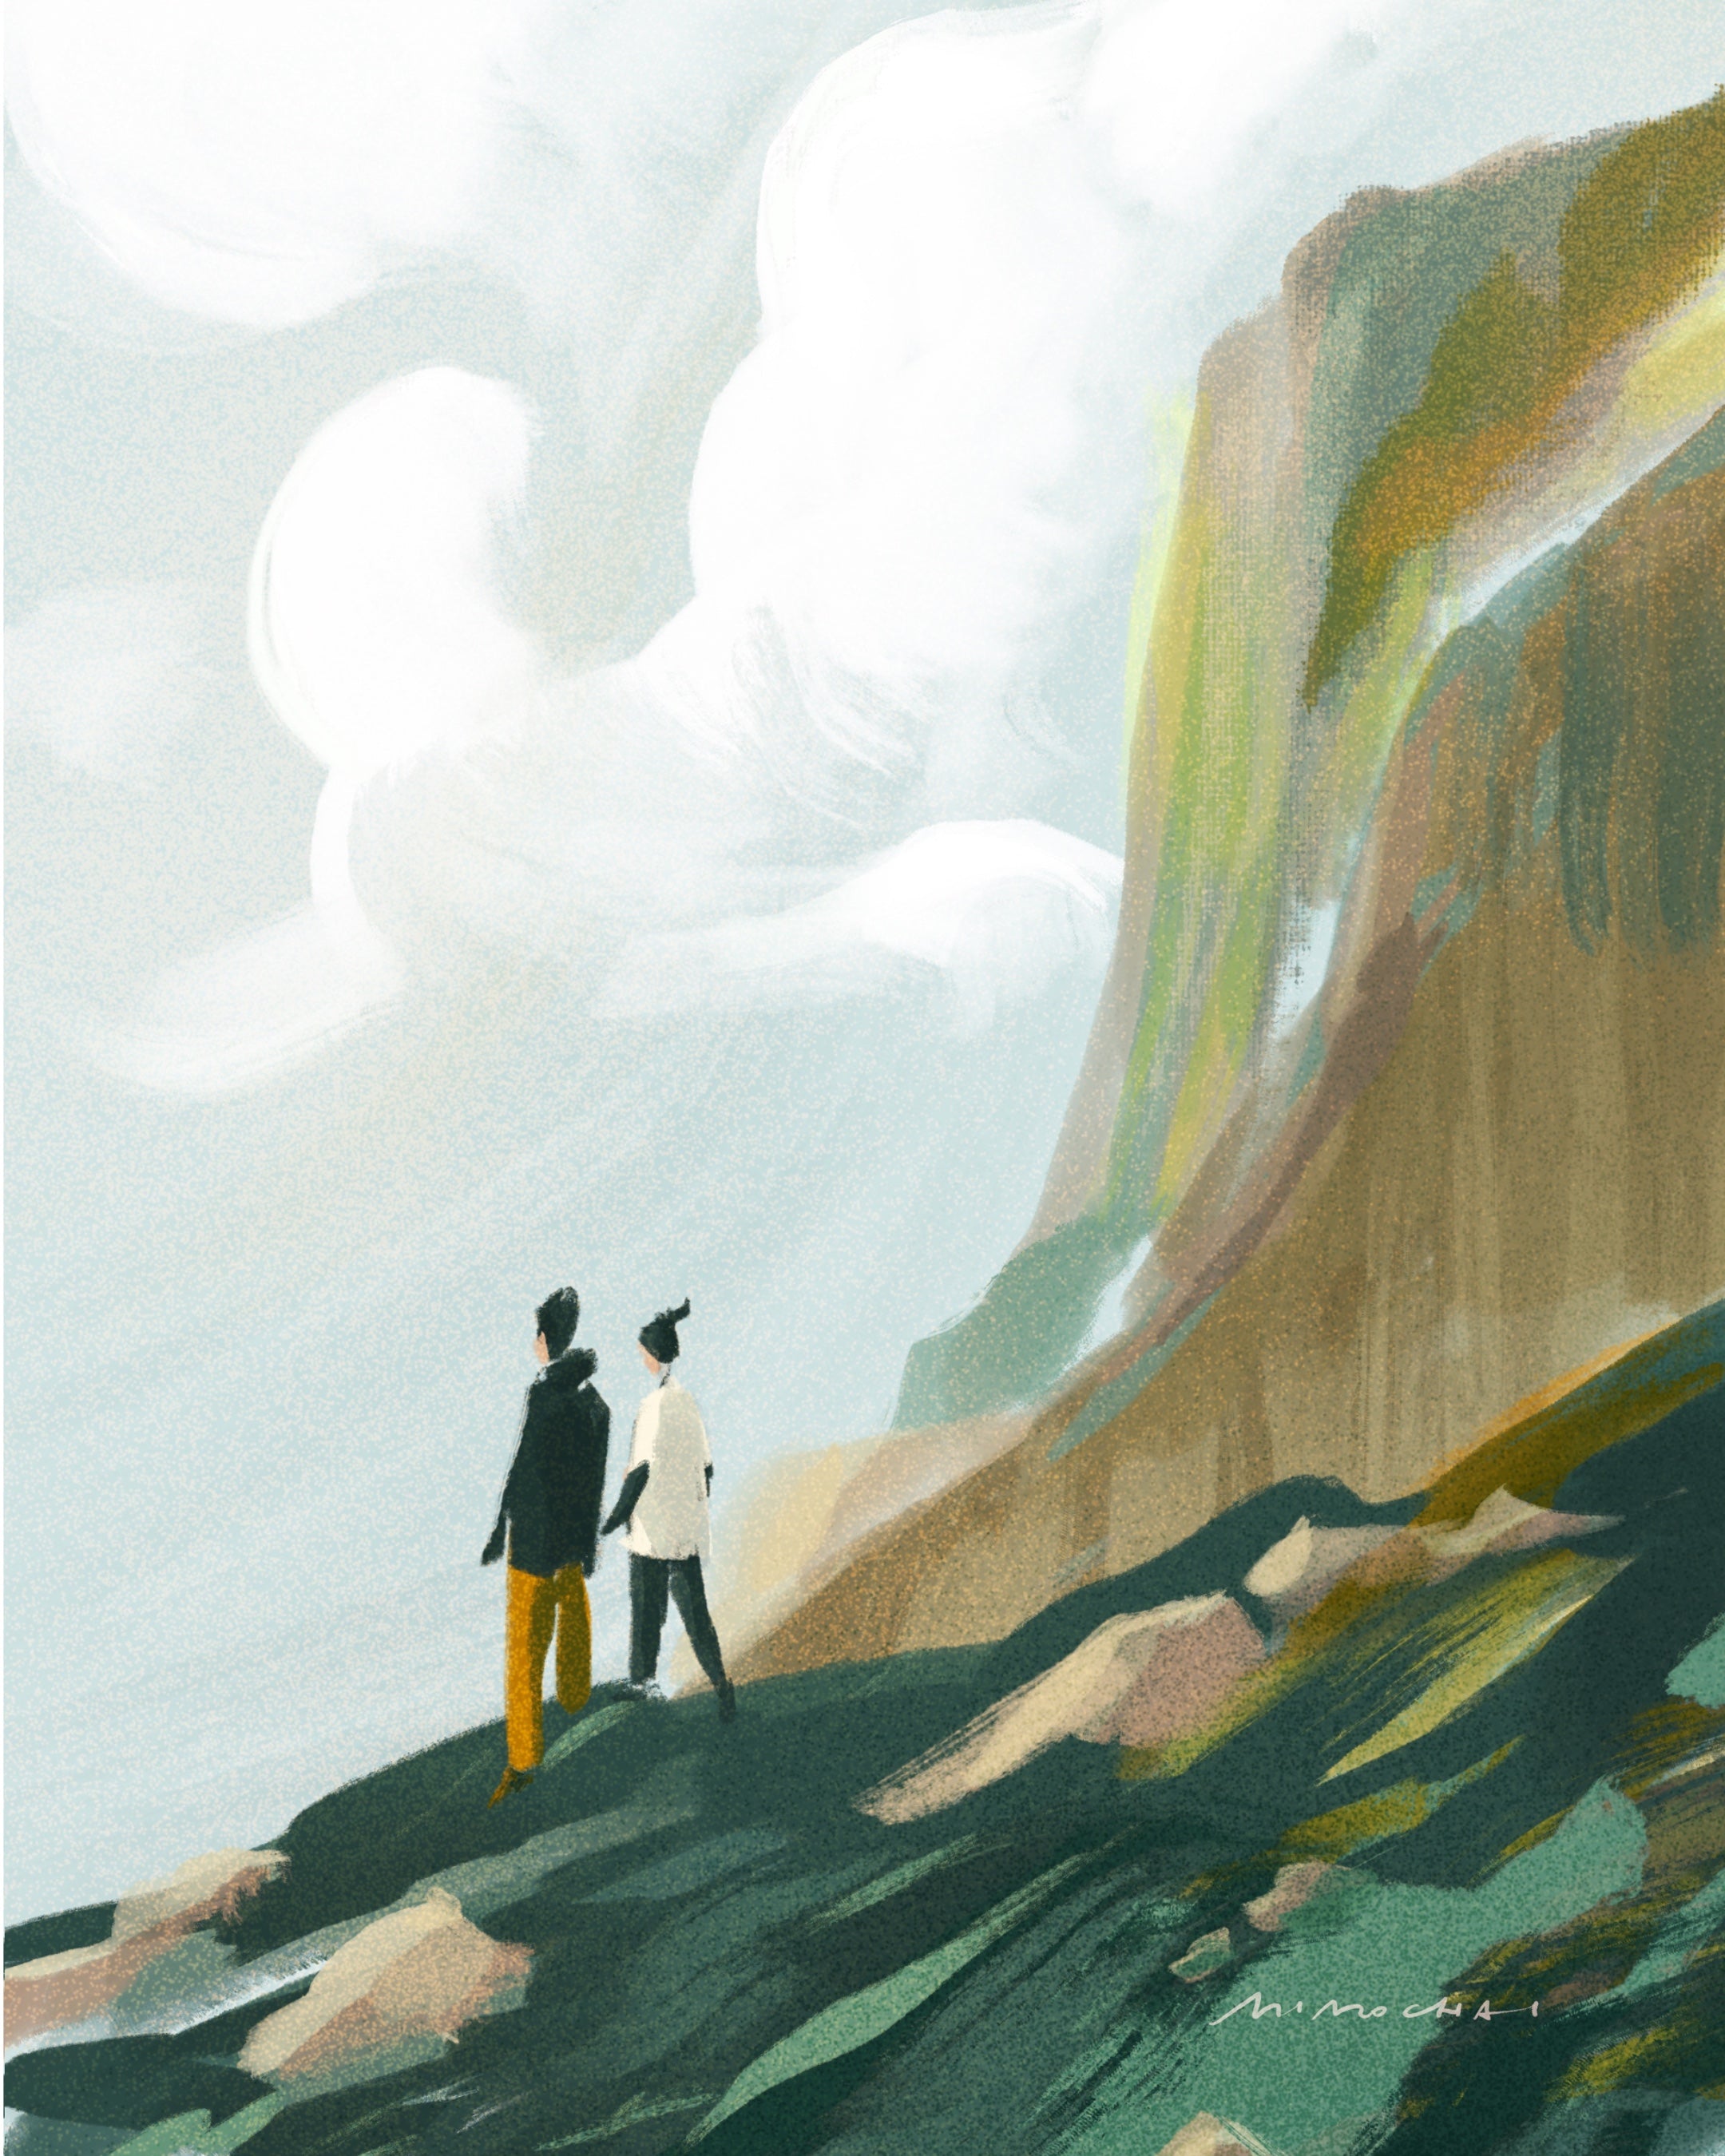 Mimochai nature cliff illustration 2023